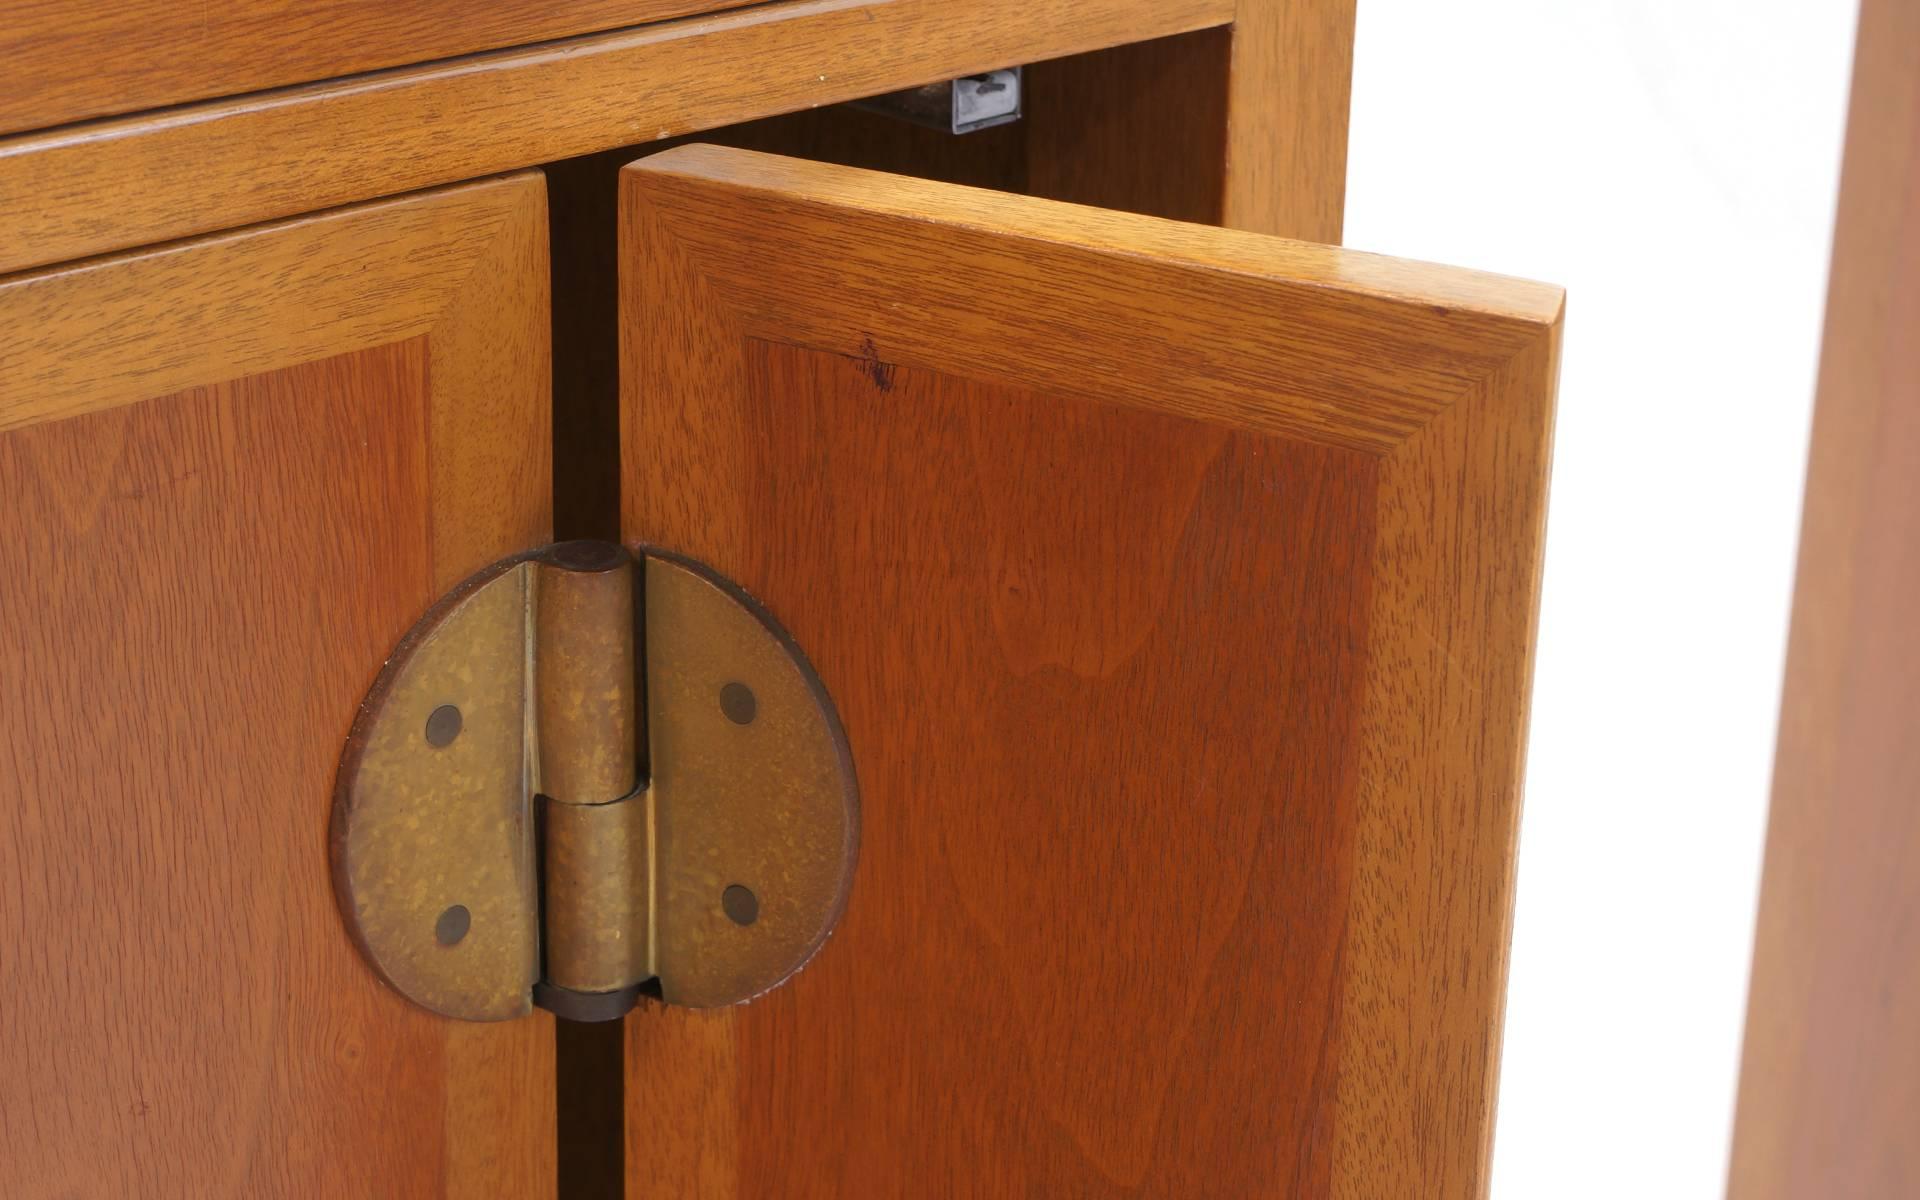 Brass Three Storage Cabinets by Edward Wormley for Dunbar. Completely Original.